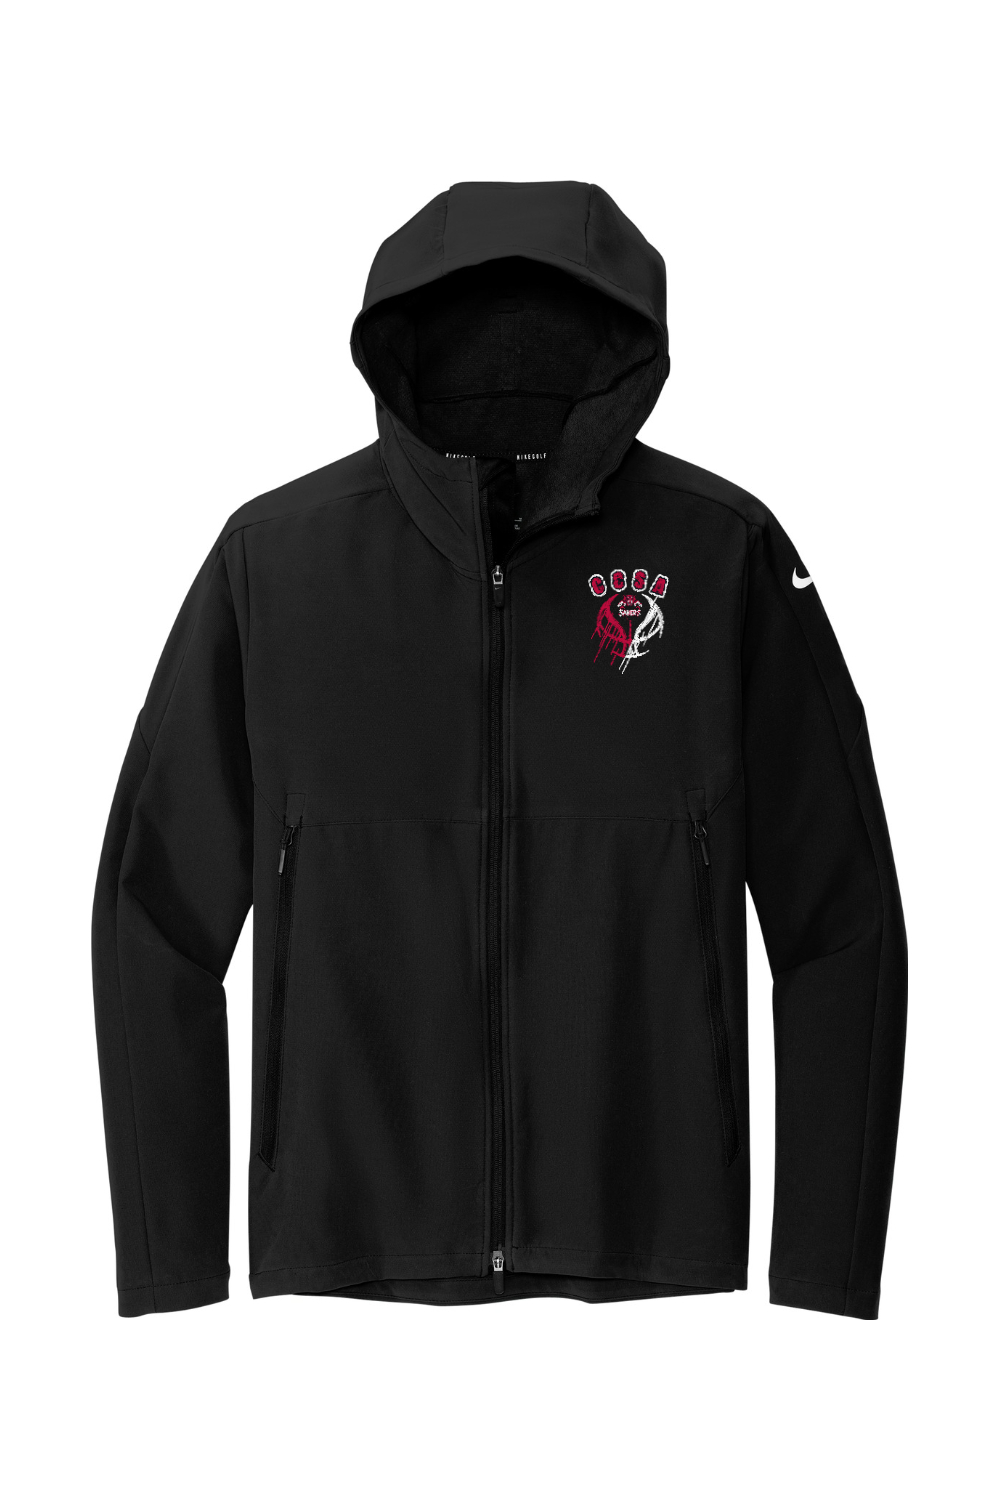 CCSA Basketball Embroidered Nike Hooded Soft Shell Jacket